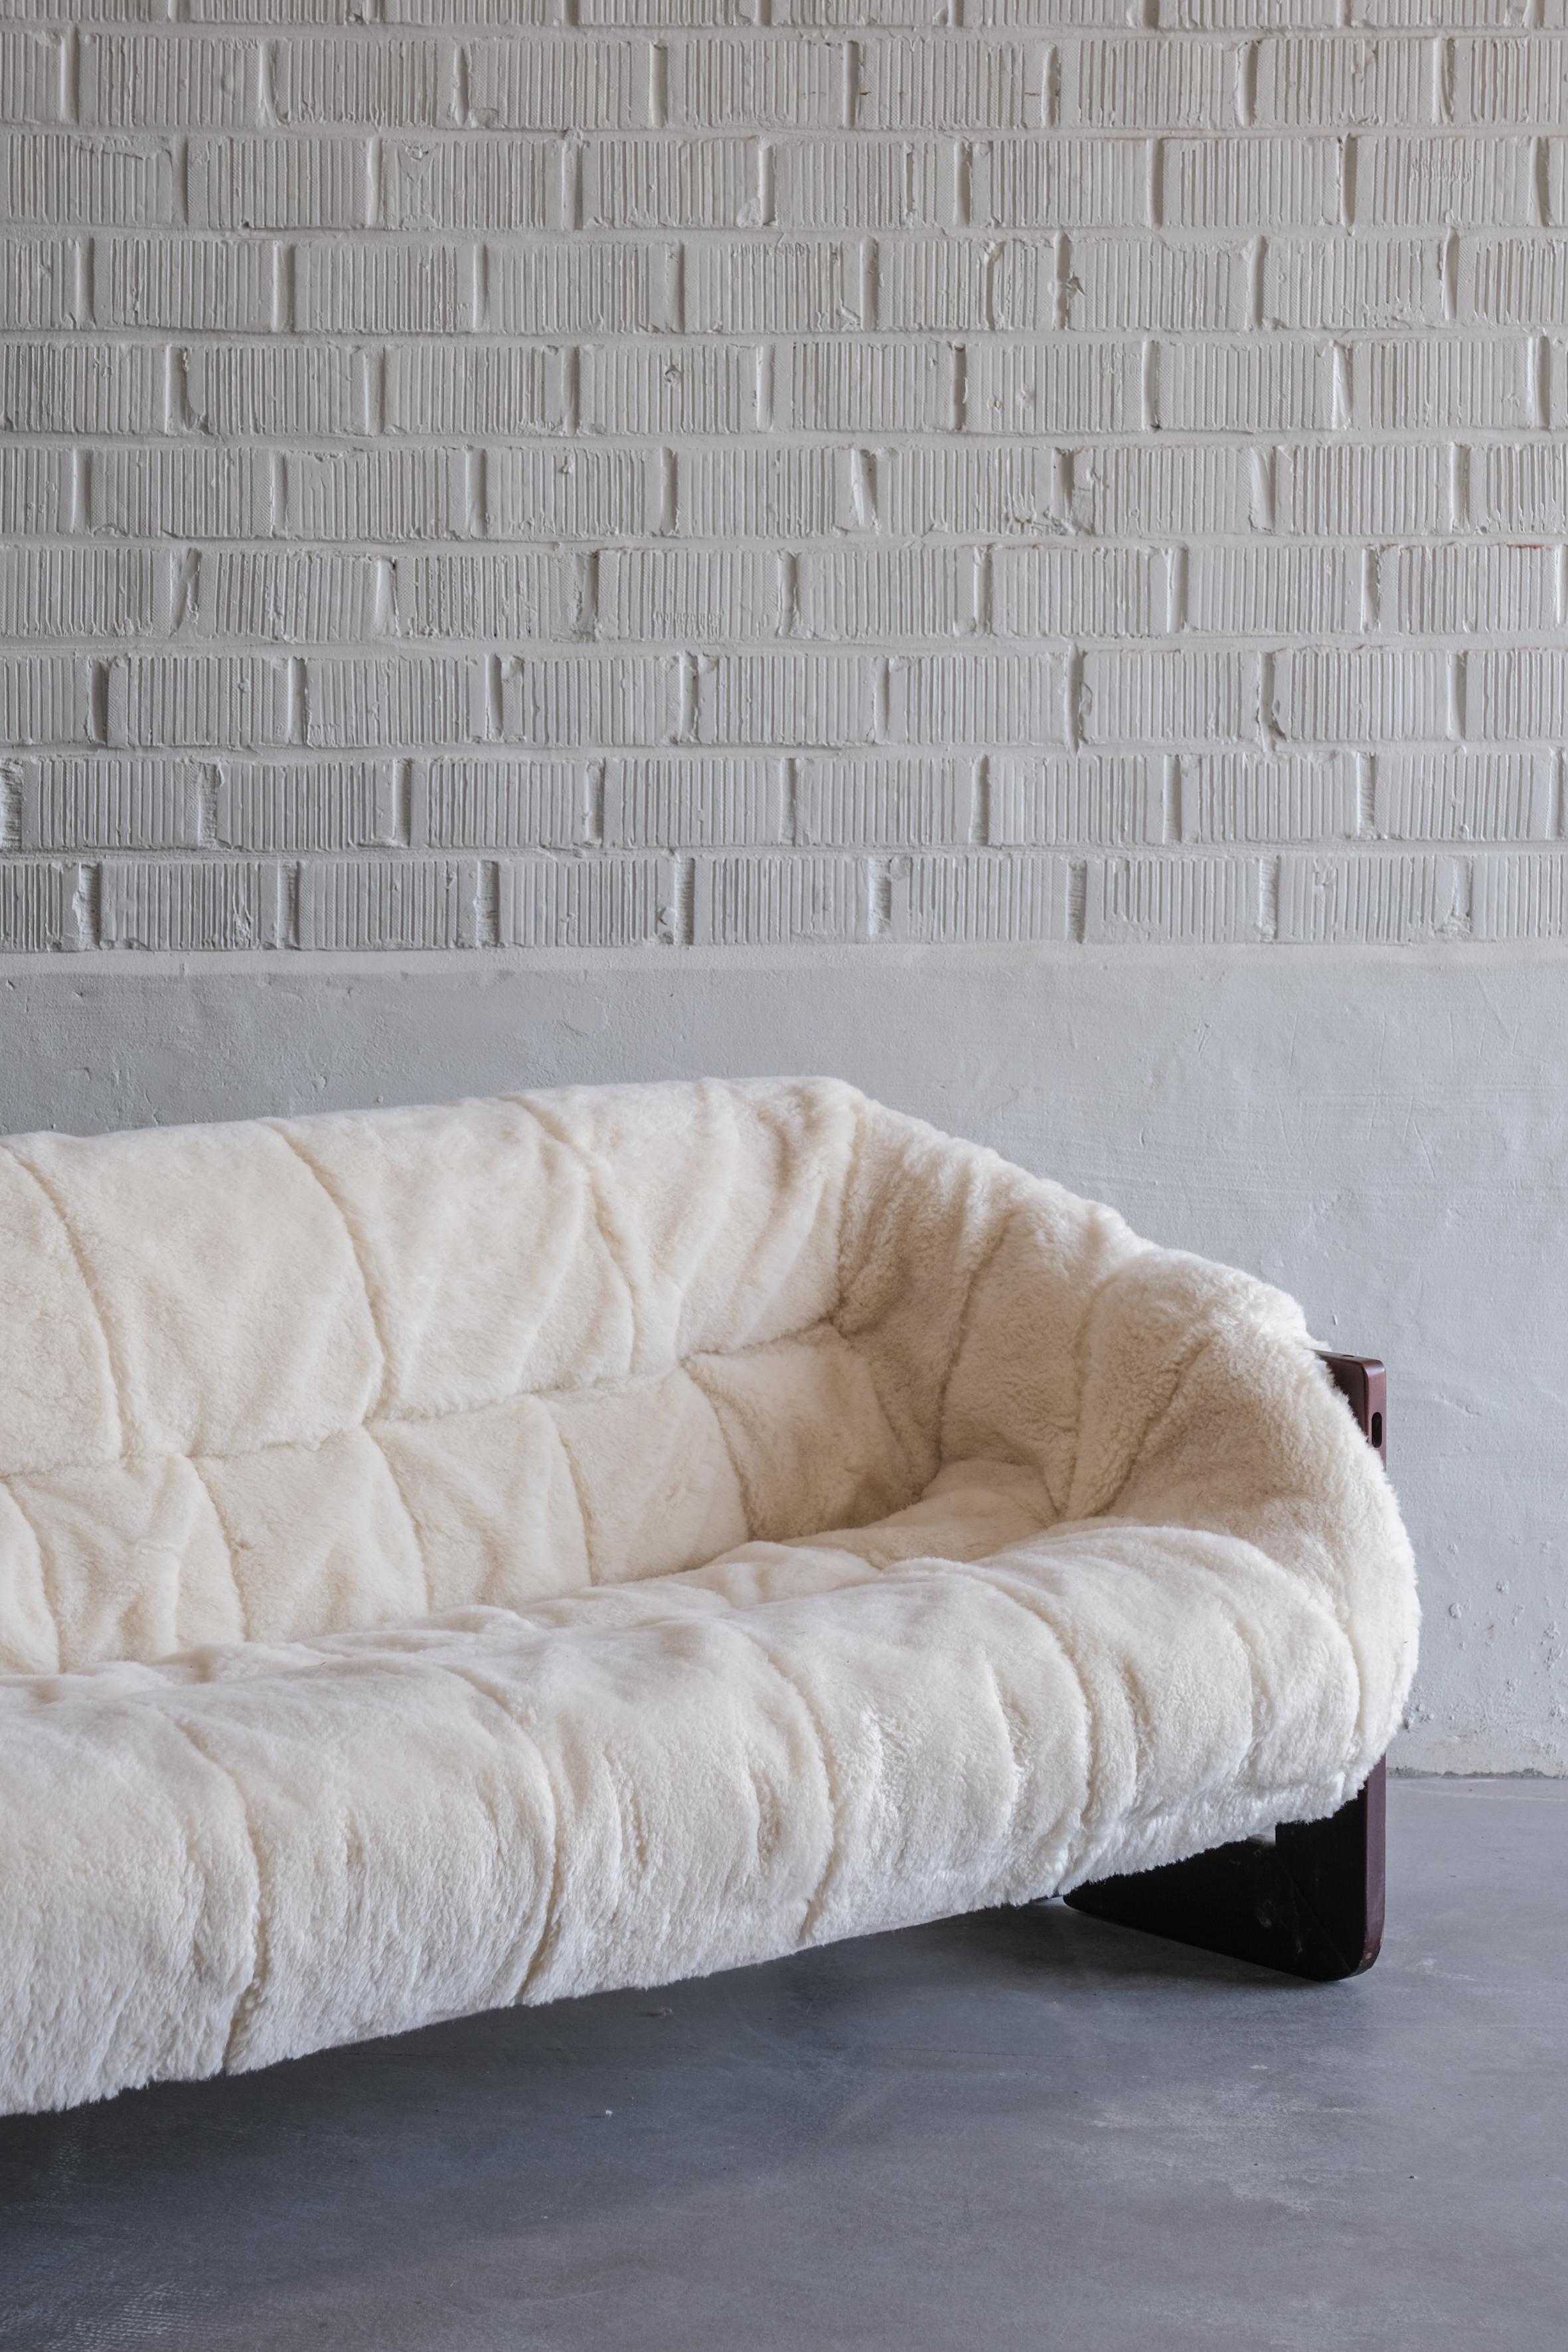 Mid-Century Modern Brazilian sofa by Percival Lafer model MP097 Wool upholstery